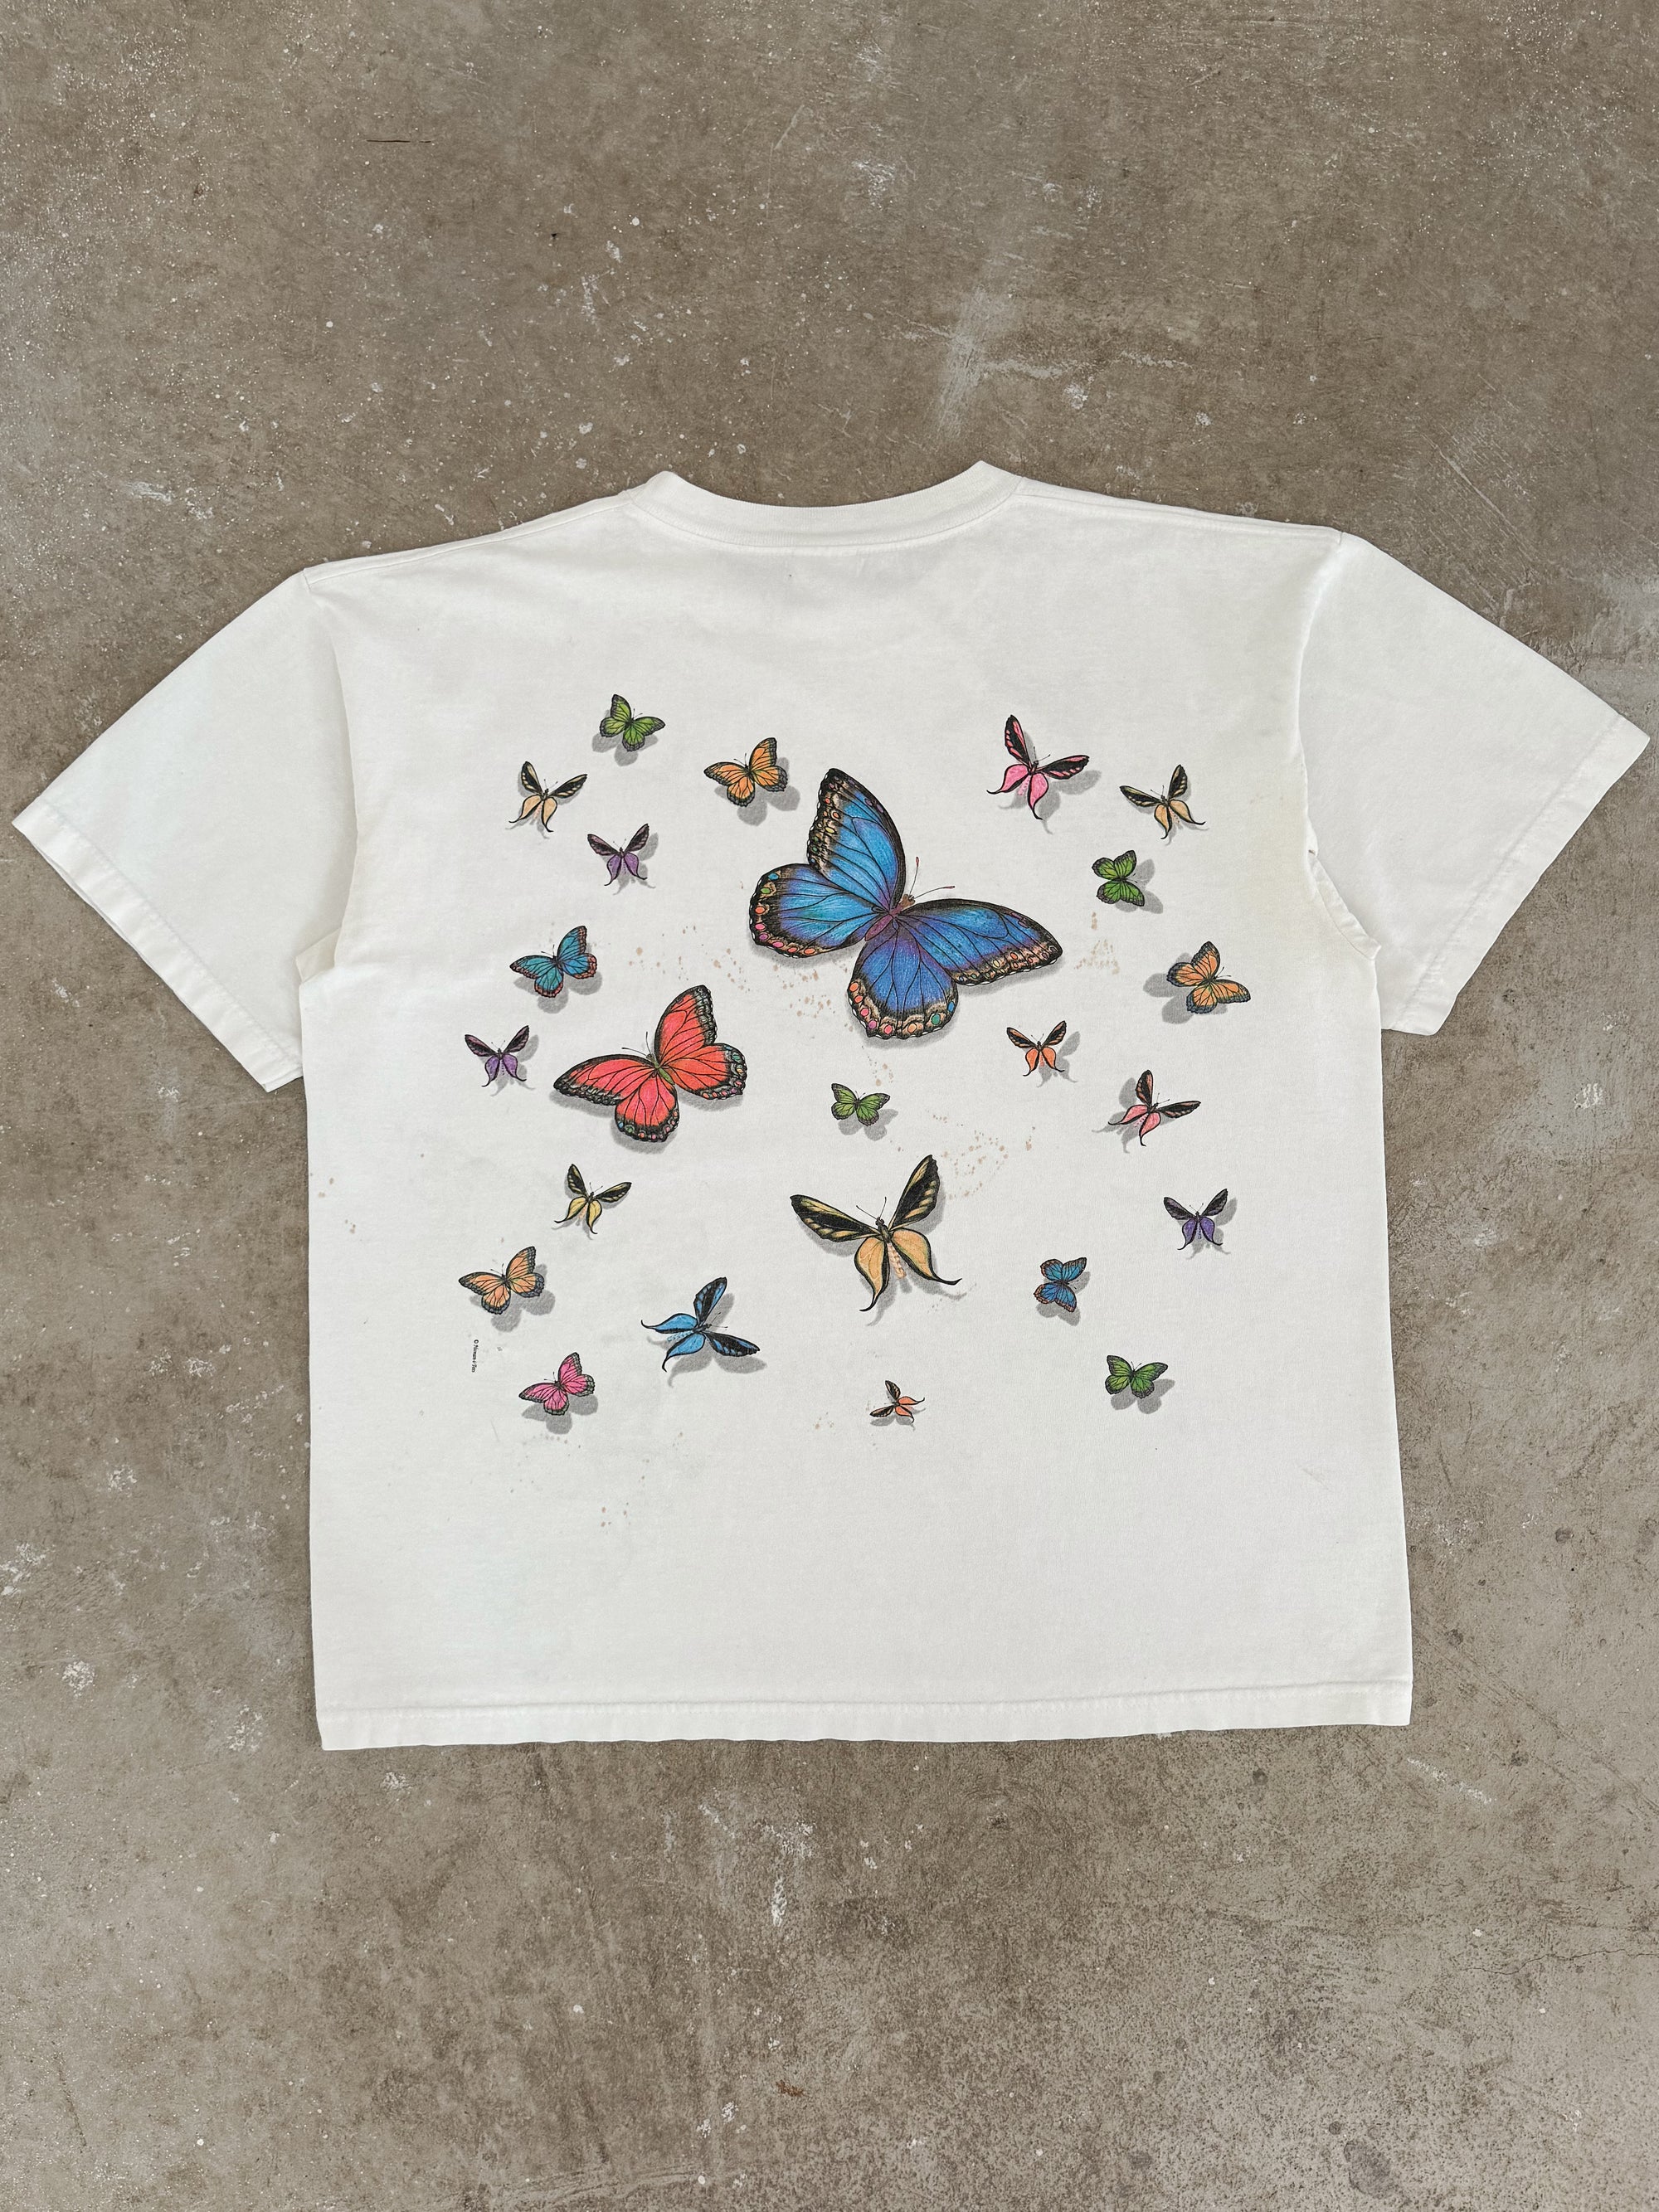 1990s "Butterfly" Tee (XL)